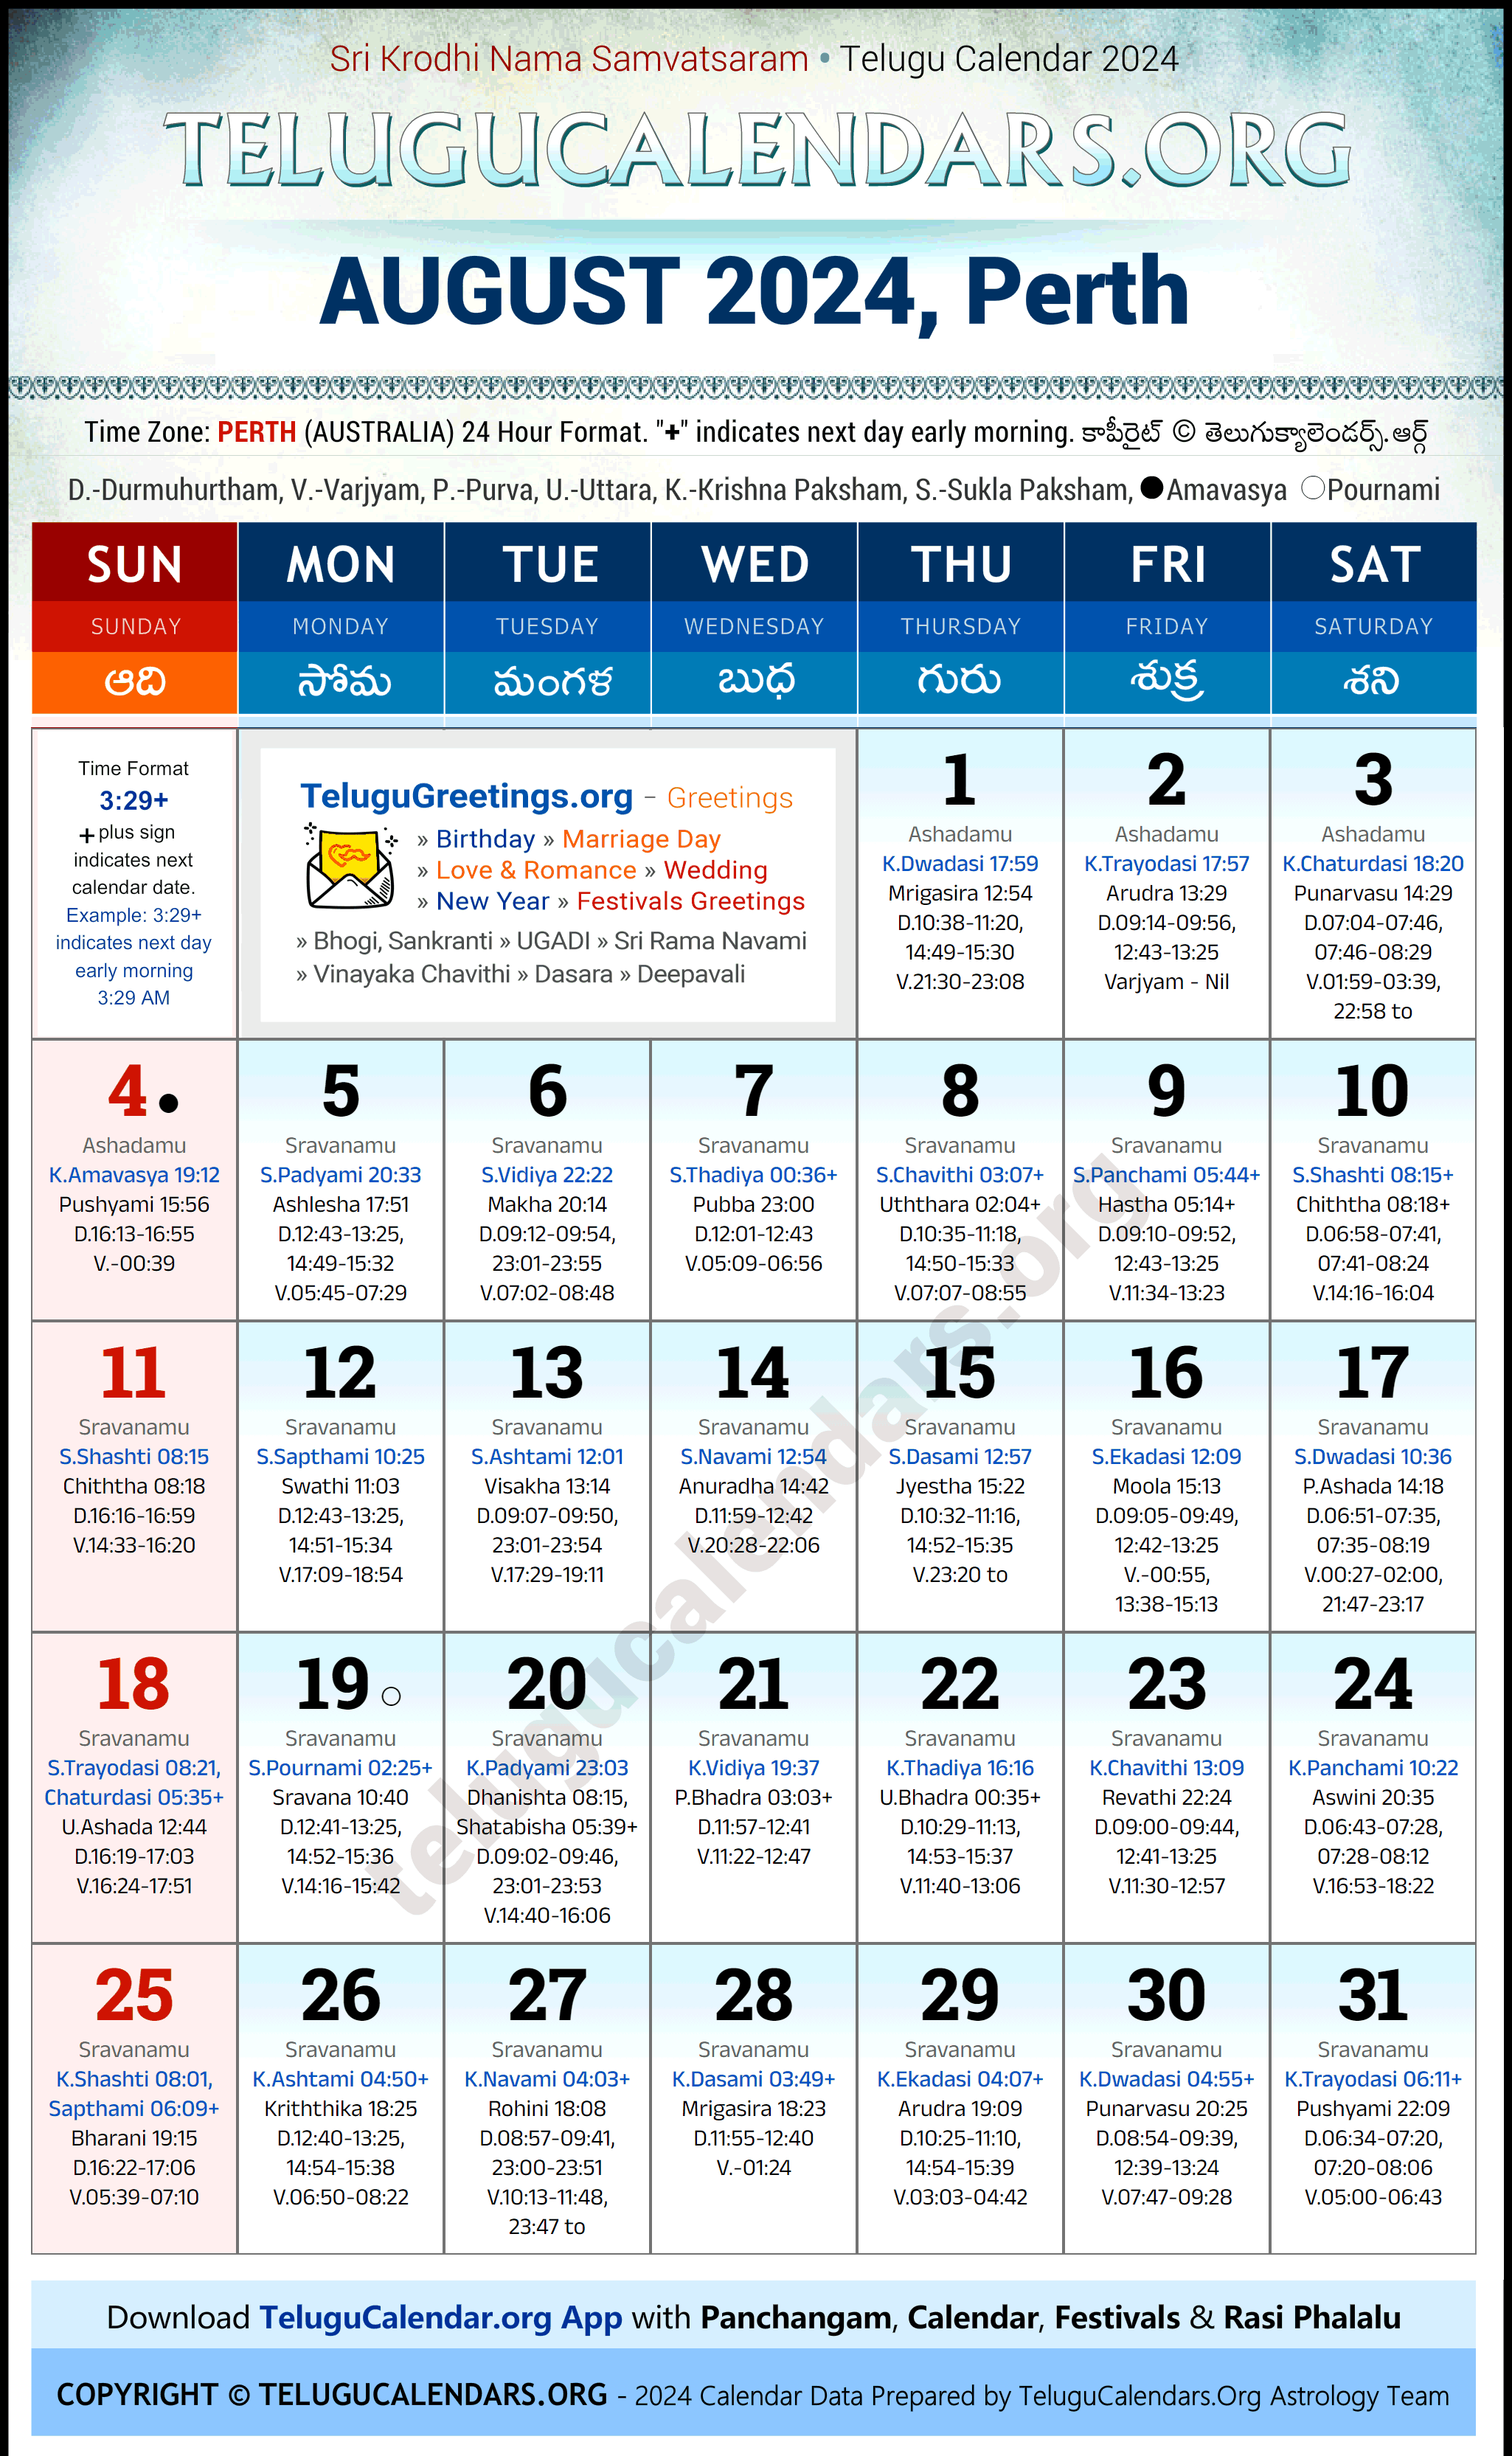 Telugu Calendar 2024 August Festivals for Perth